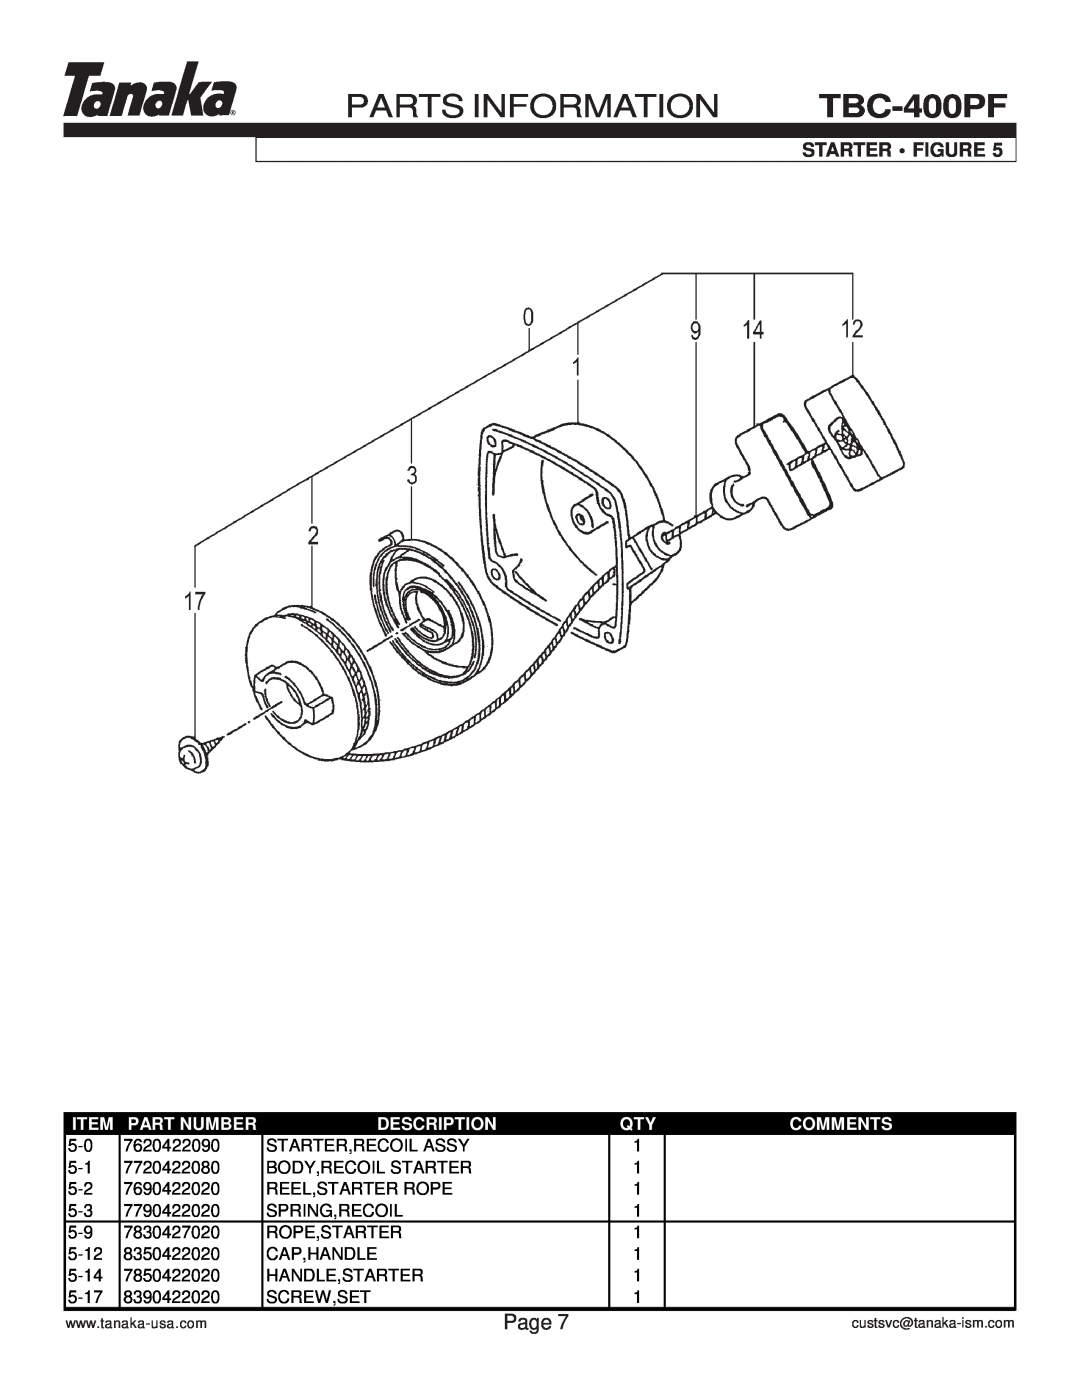 Tanaka TBC-400PF manual Starter Figure, Parts Information, Page, Part Number, Description, Comments 